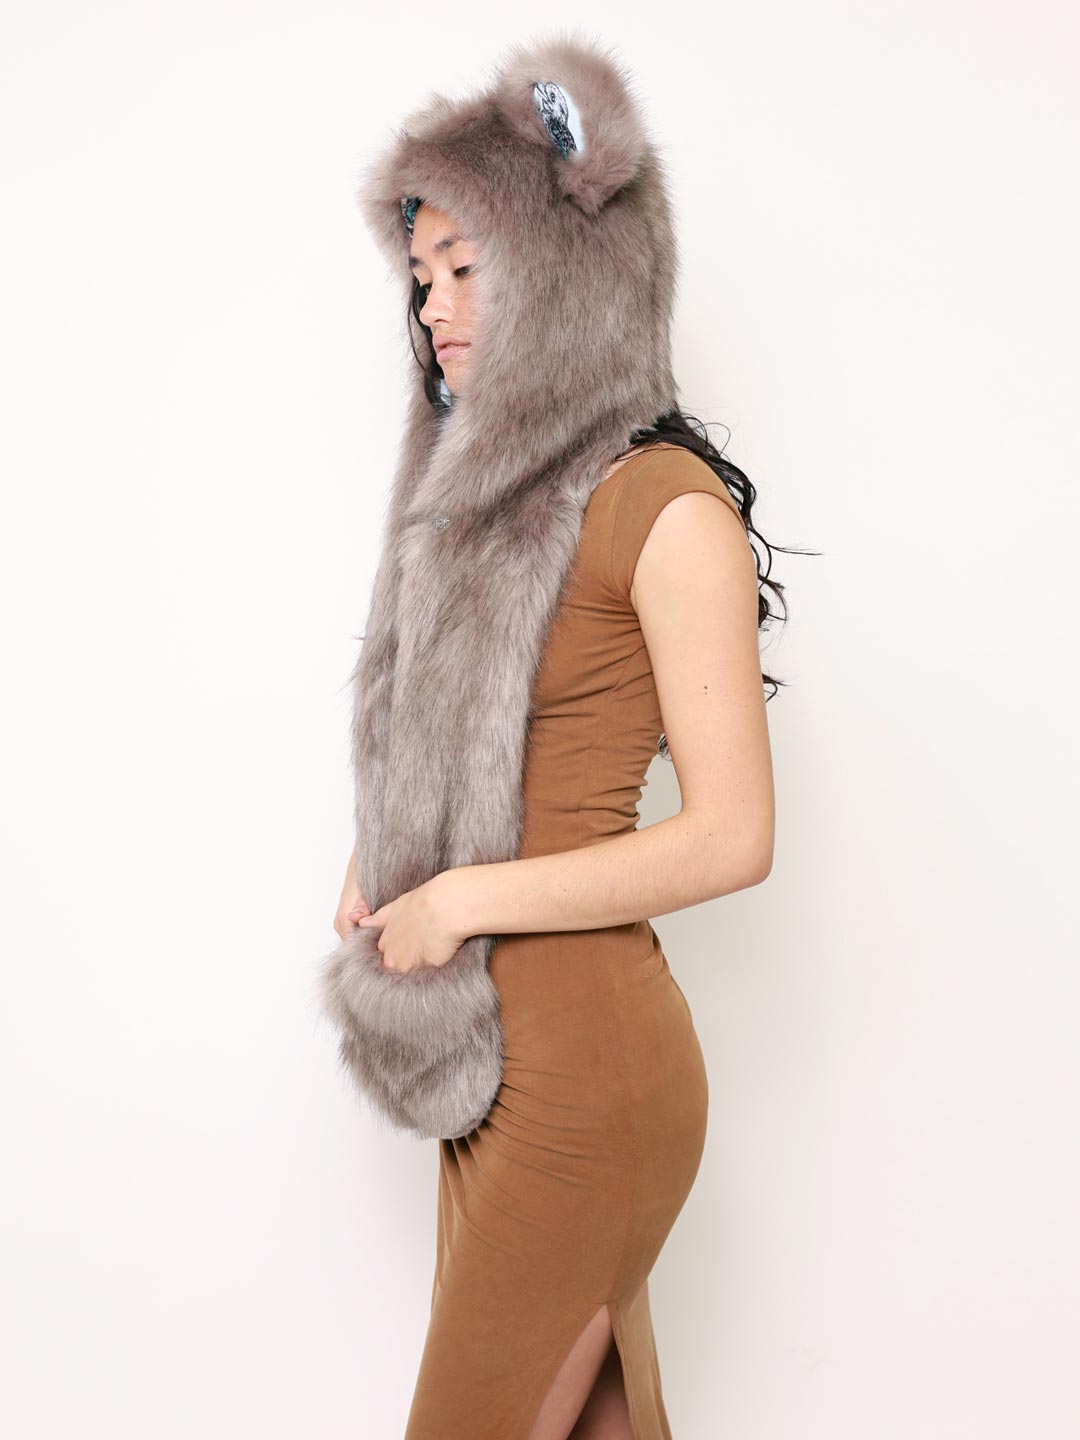 James Patrick Koala Artist Edition Faux Fur with Hood on Female Model